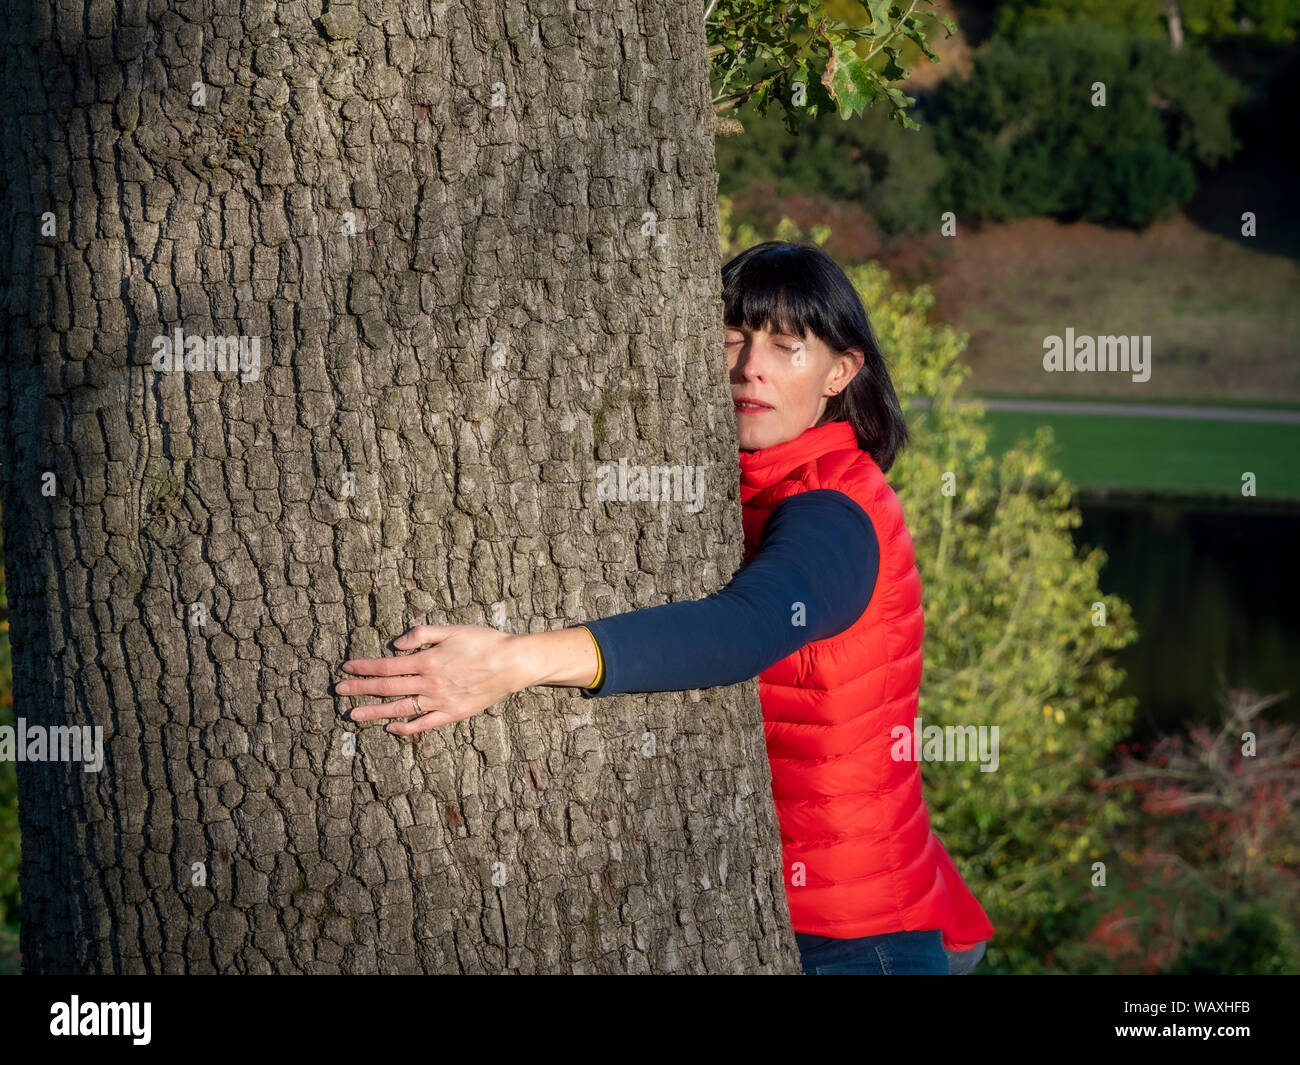 Tree hug uk hi-res stock photography and images - Alamy